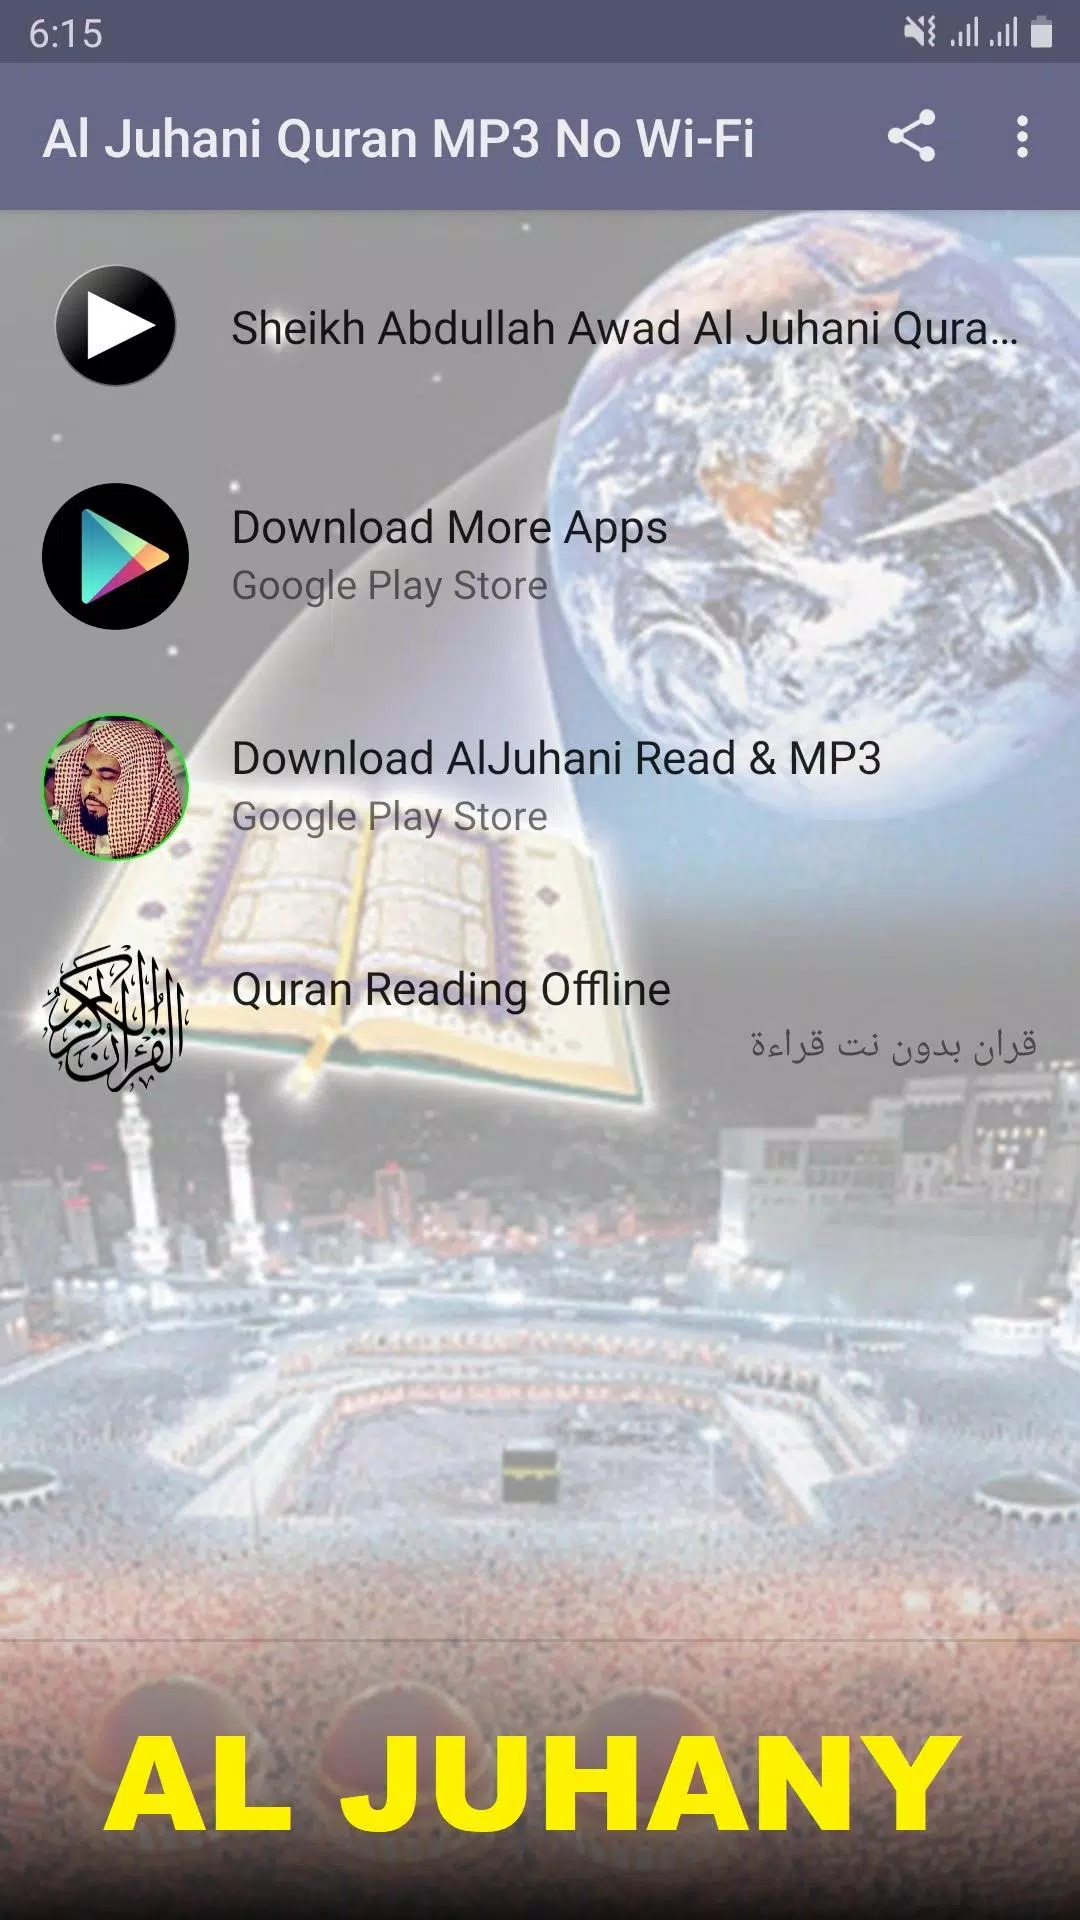 Al Juhani Quran MP3 No Wi-Fi APK for Android Download